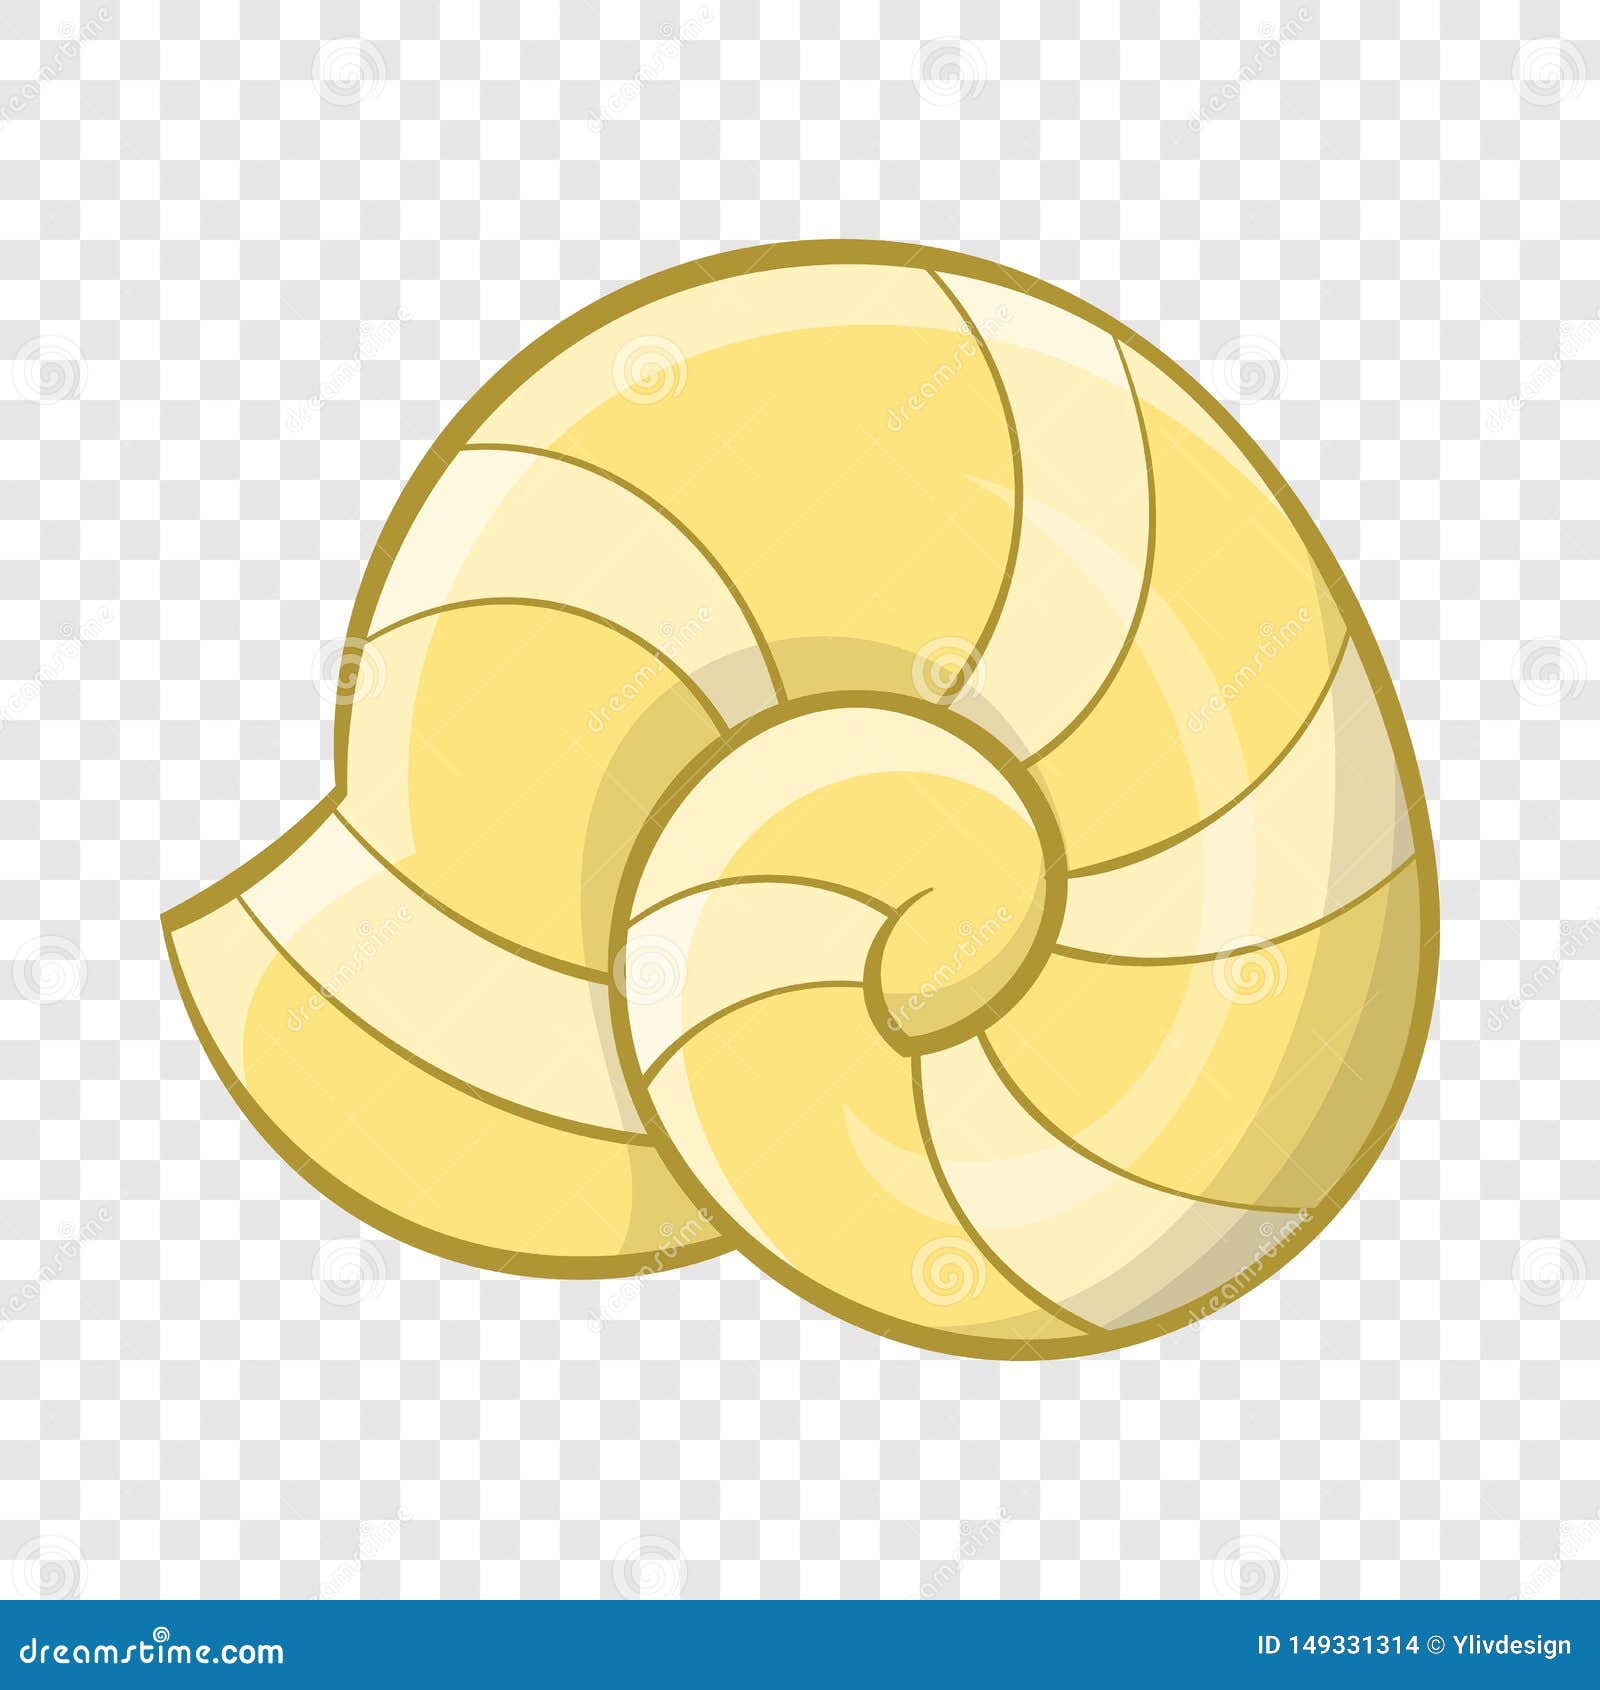 Shell icon, cartoon style stock vector. Illustration of marine - 149331314